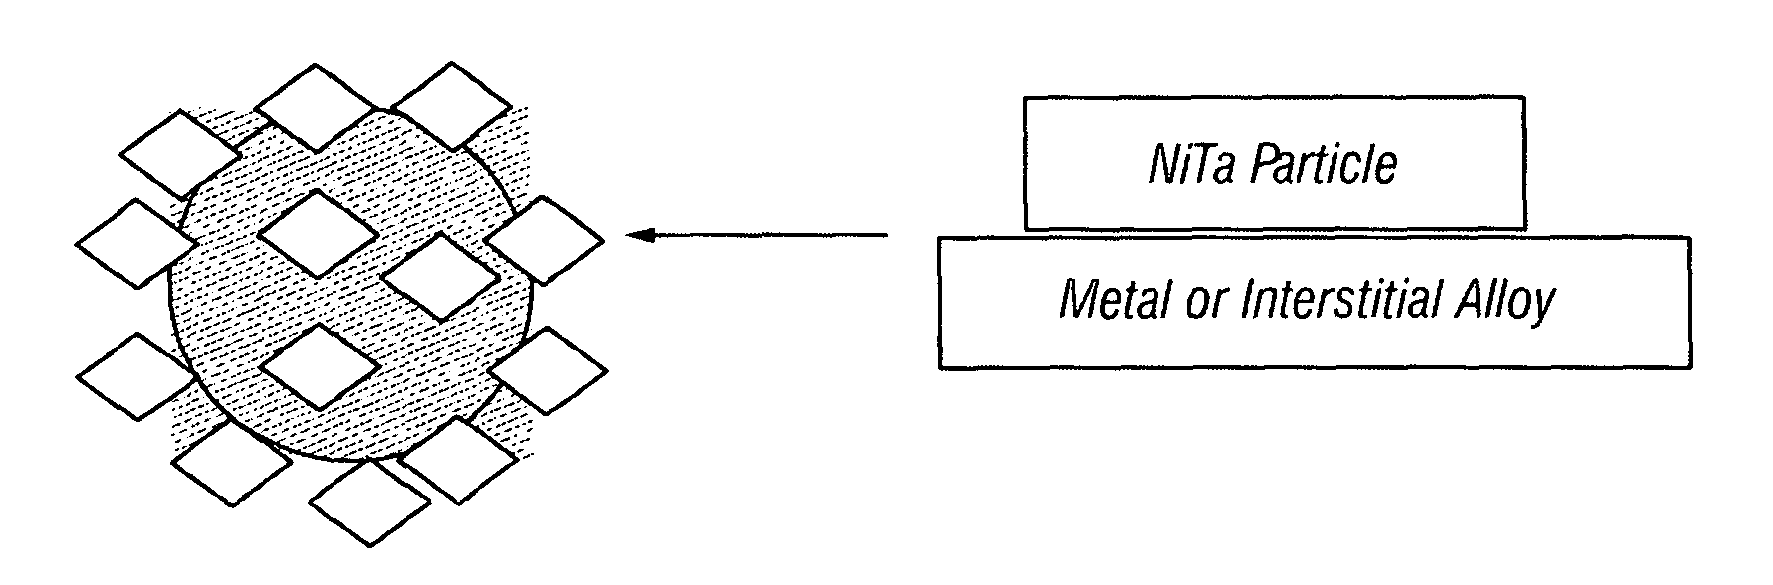 Peritectic, metastable alloys containing tantalum and nickel